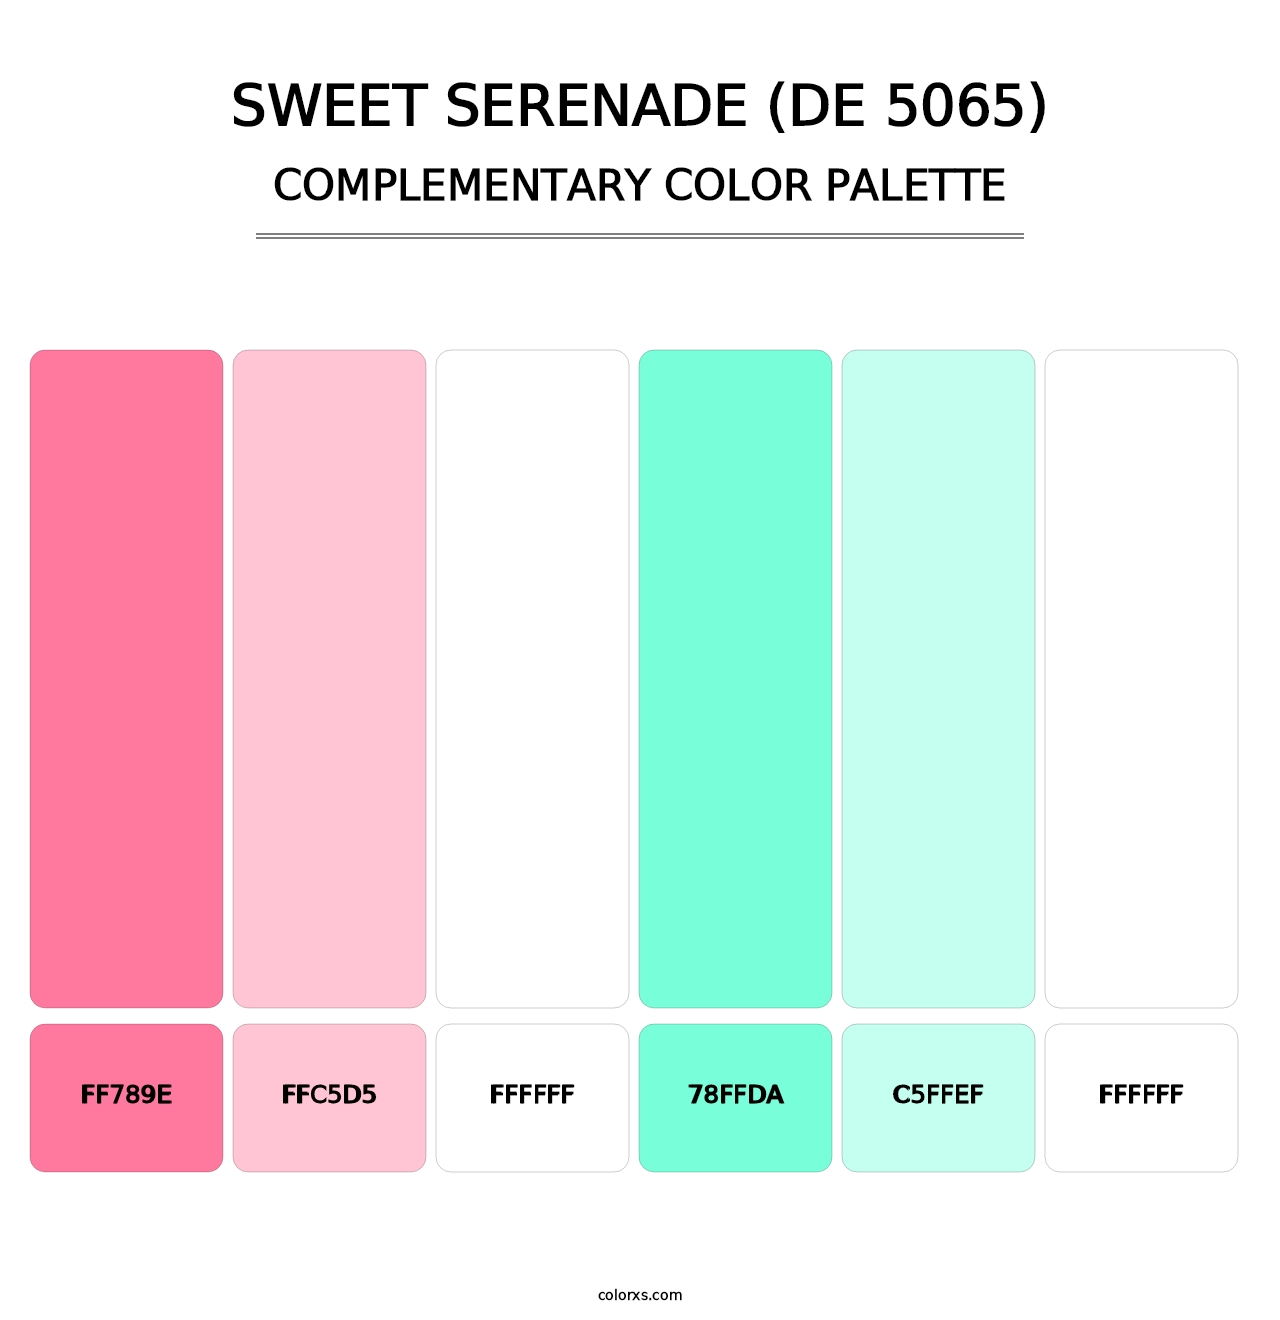 Sweet Serenade (DE 5065) - Complementary Color Palette